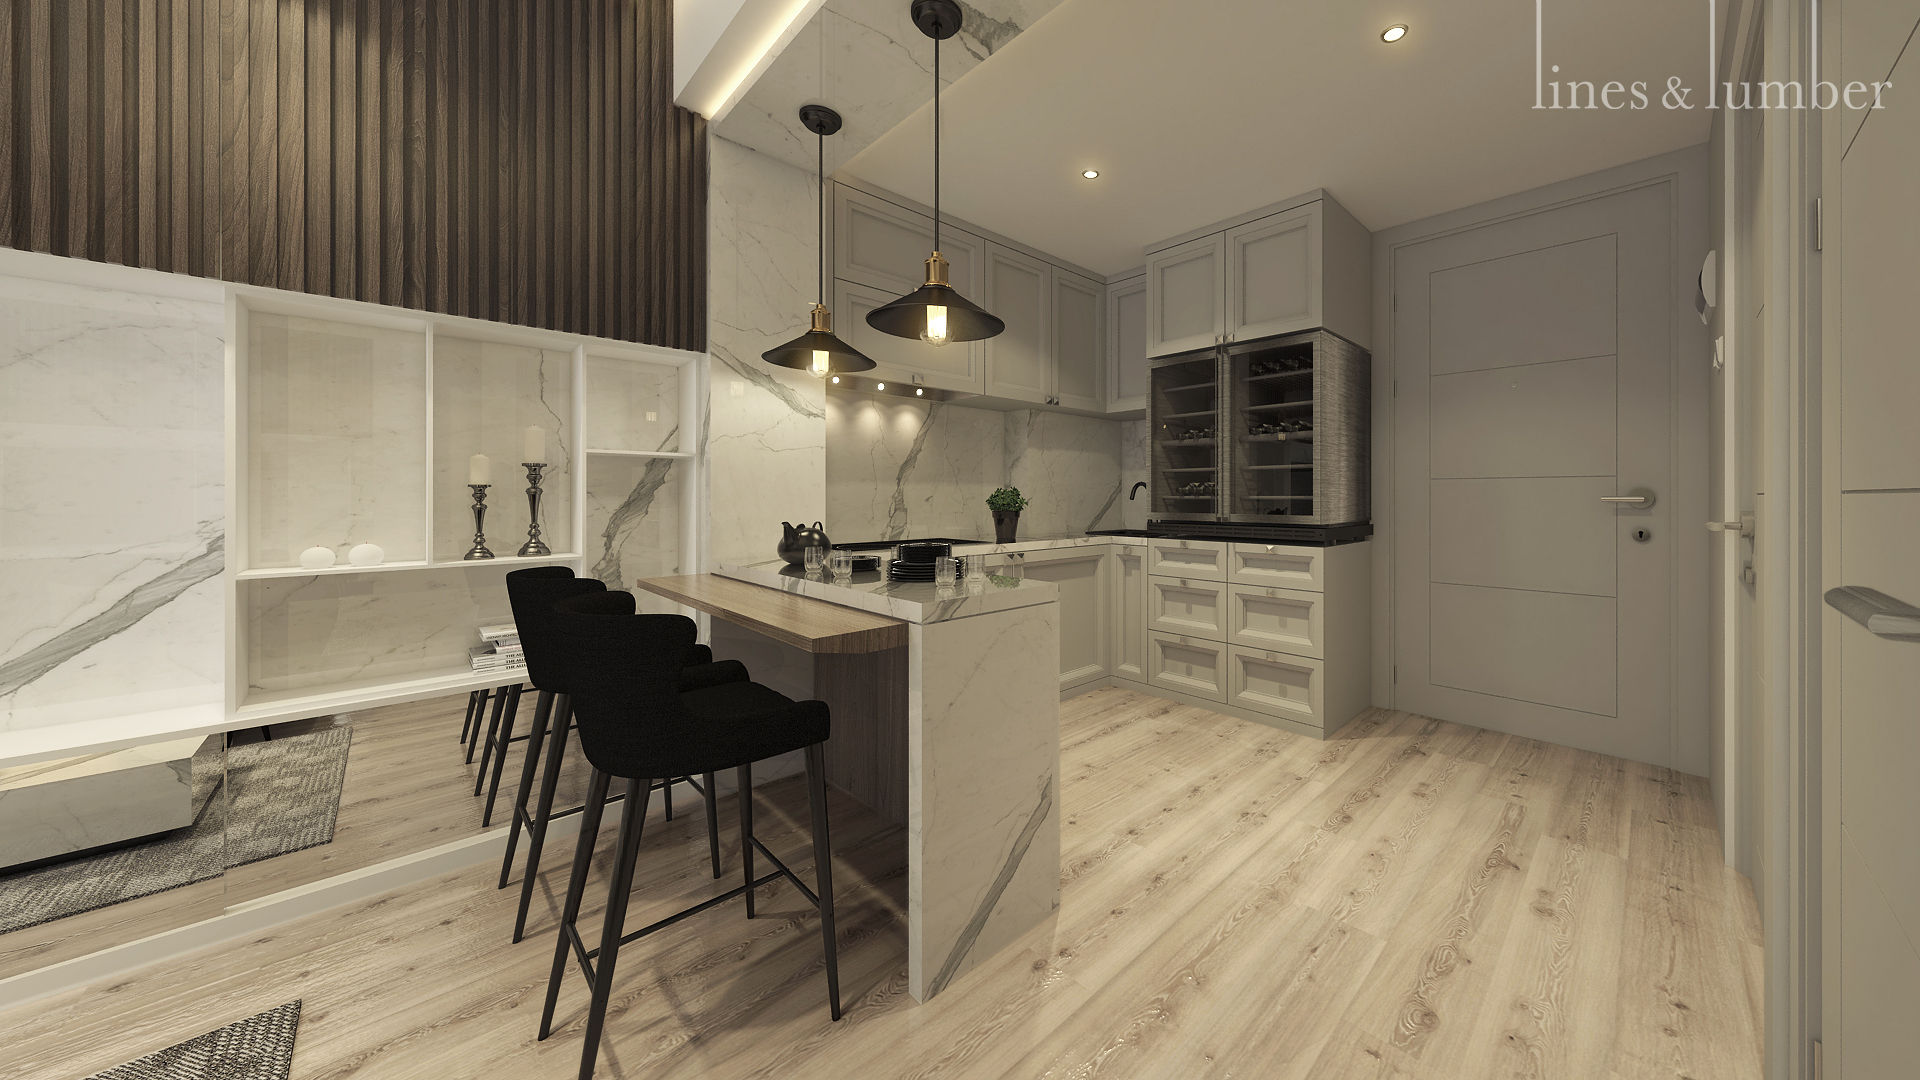 Studio Apartment, Sandalwood Springhill , Lines & Lumber Lines & Lumber ห้องครัว